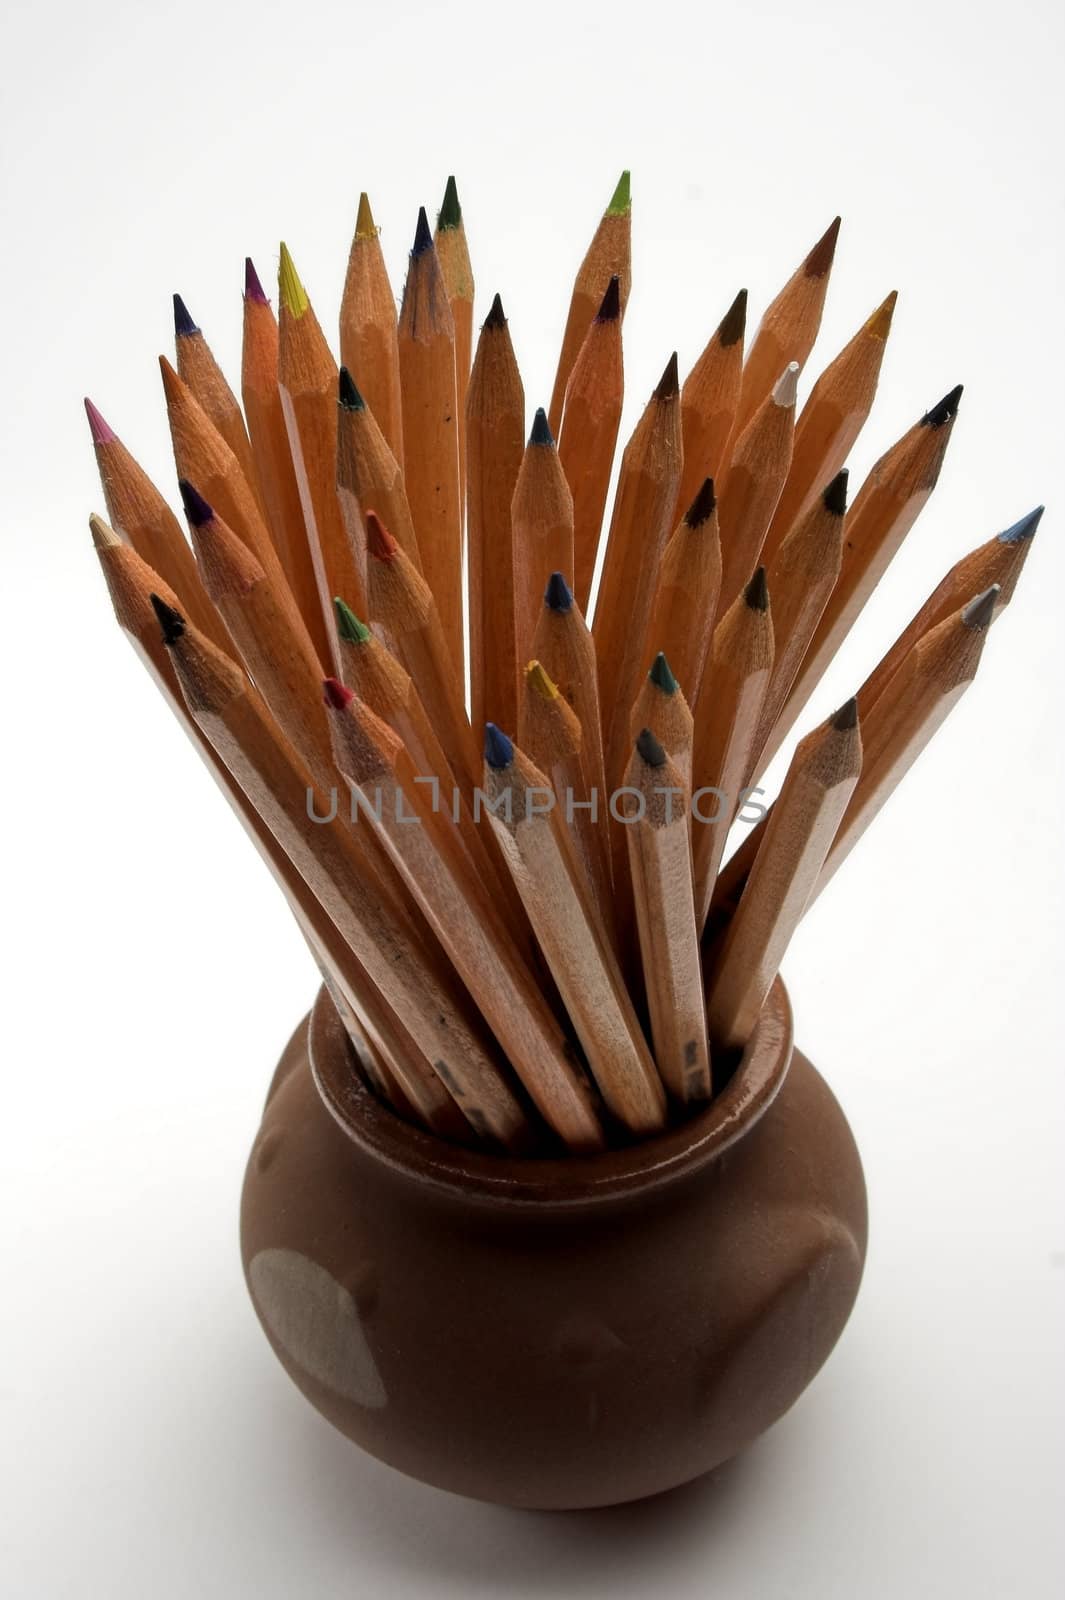 Colored pensils by alexkosev